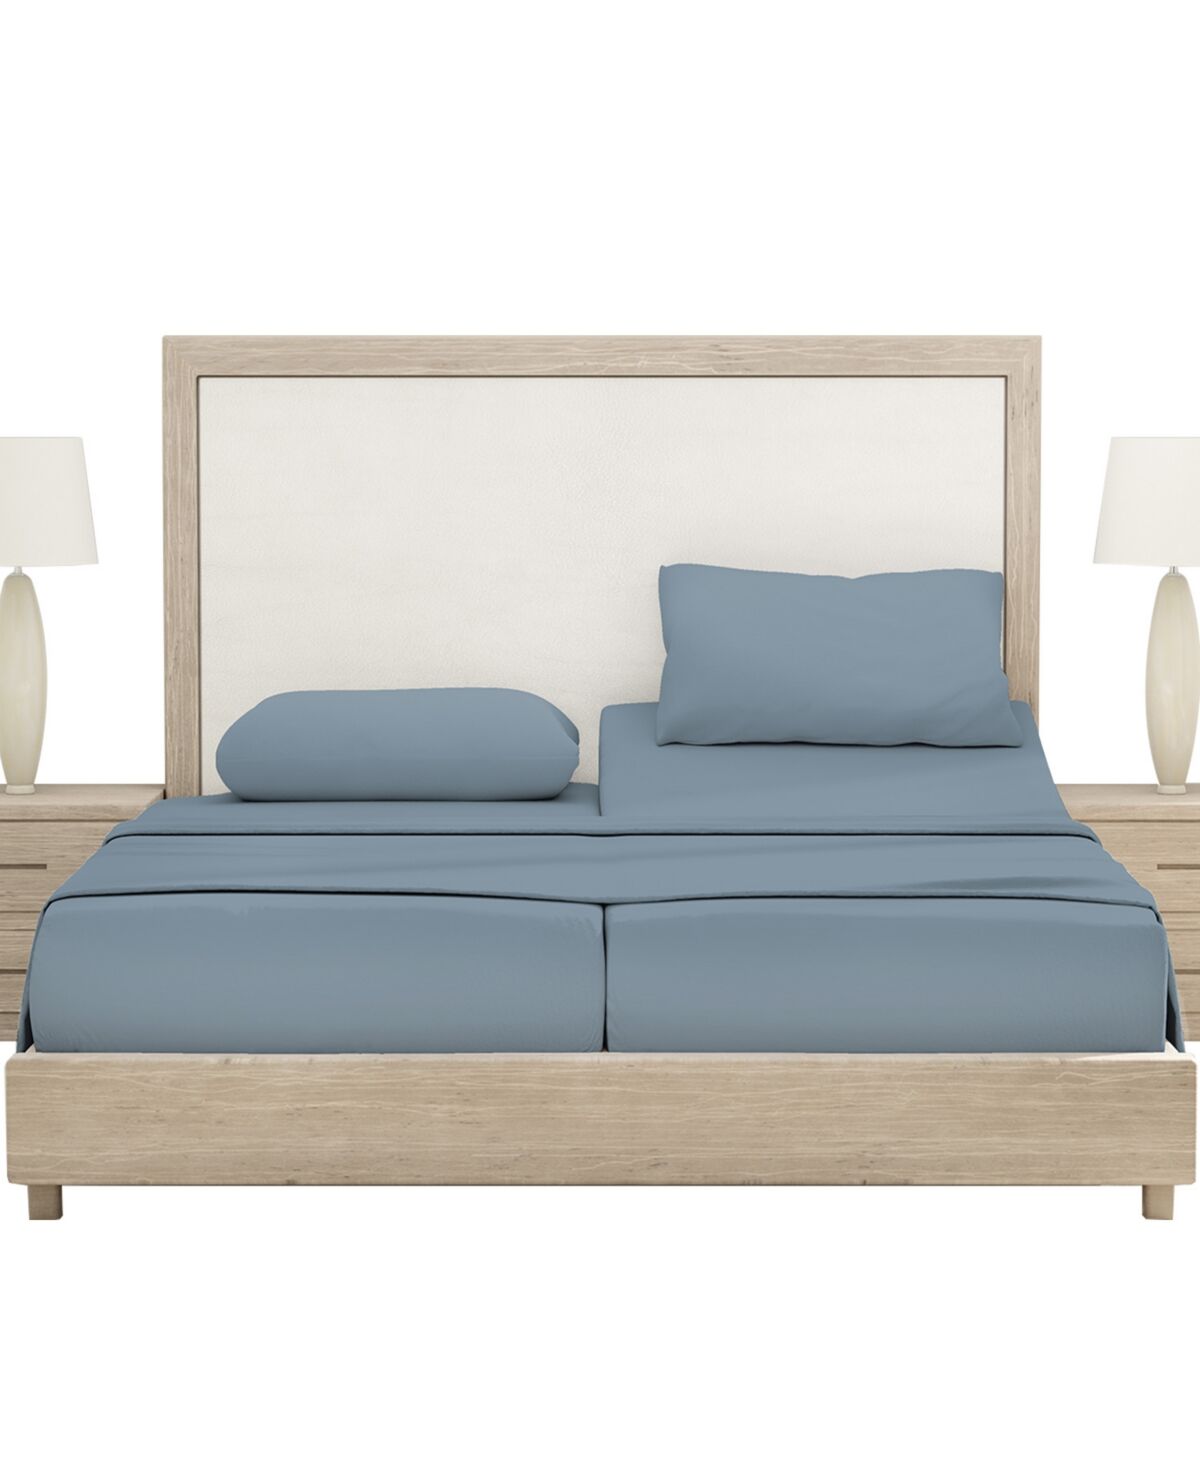 California Design Den Luxury Bed Sheets Set - 800 Thread Count 100% Cotton Sheets, Deep Pocket, Soft, Cool & Breathable - Split King Size - Pastel blue - steel